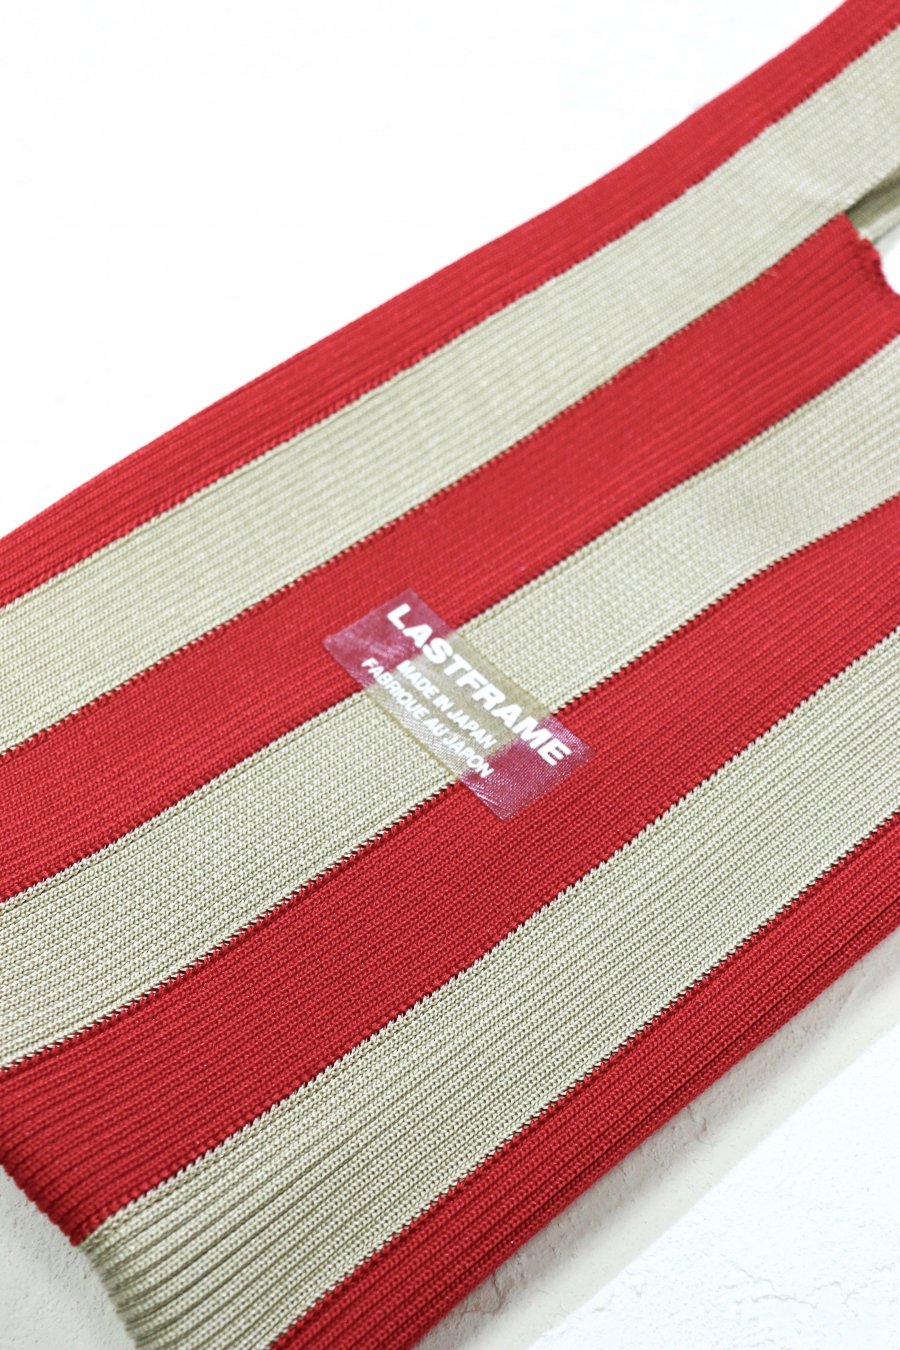 LASTFRAME STRIPE MARKET BAG SMALL（RED x BEIGE）